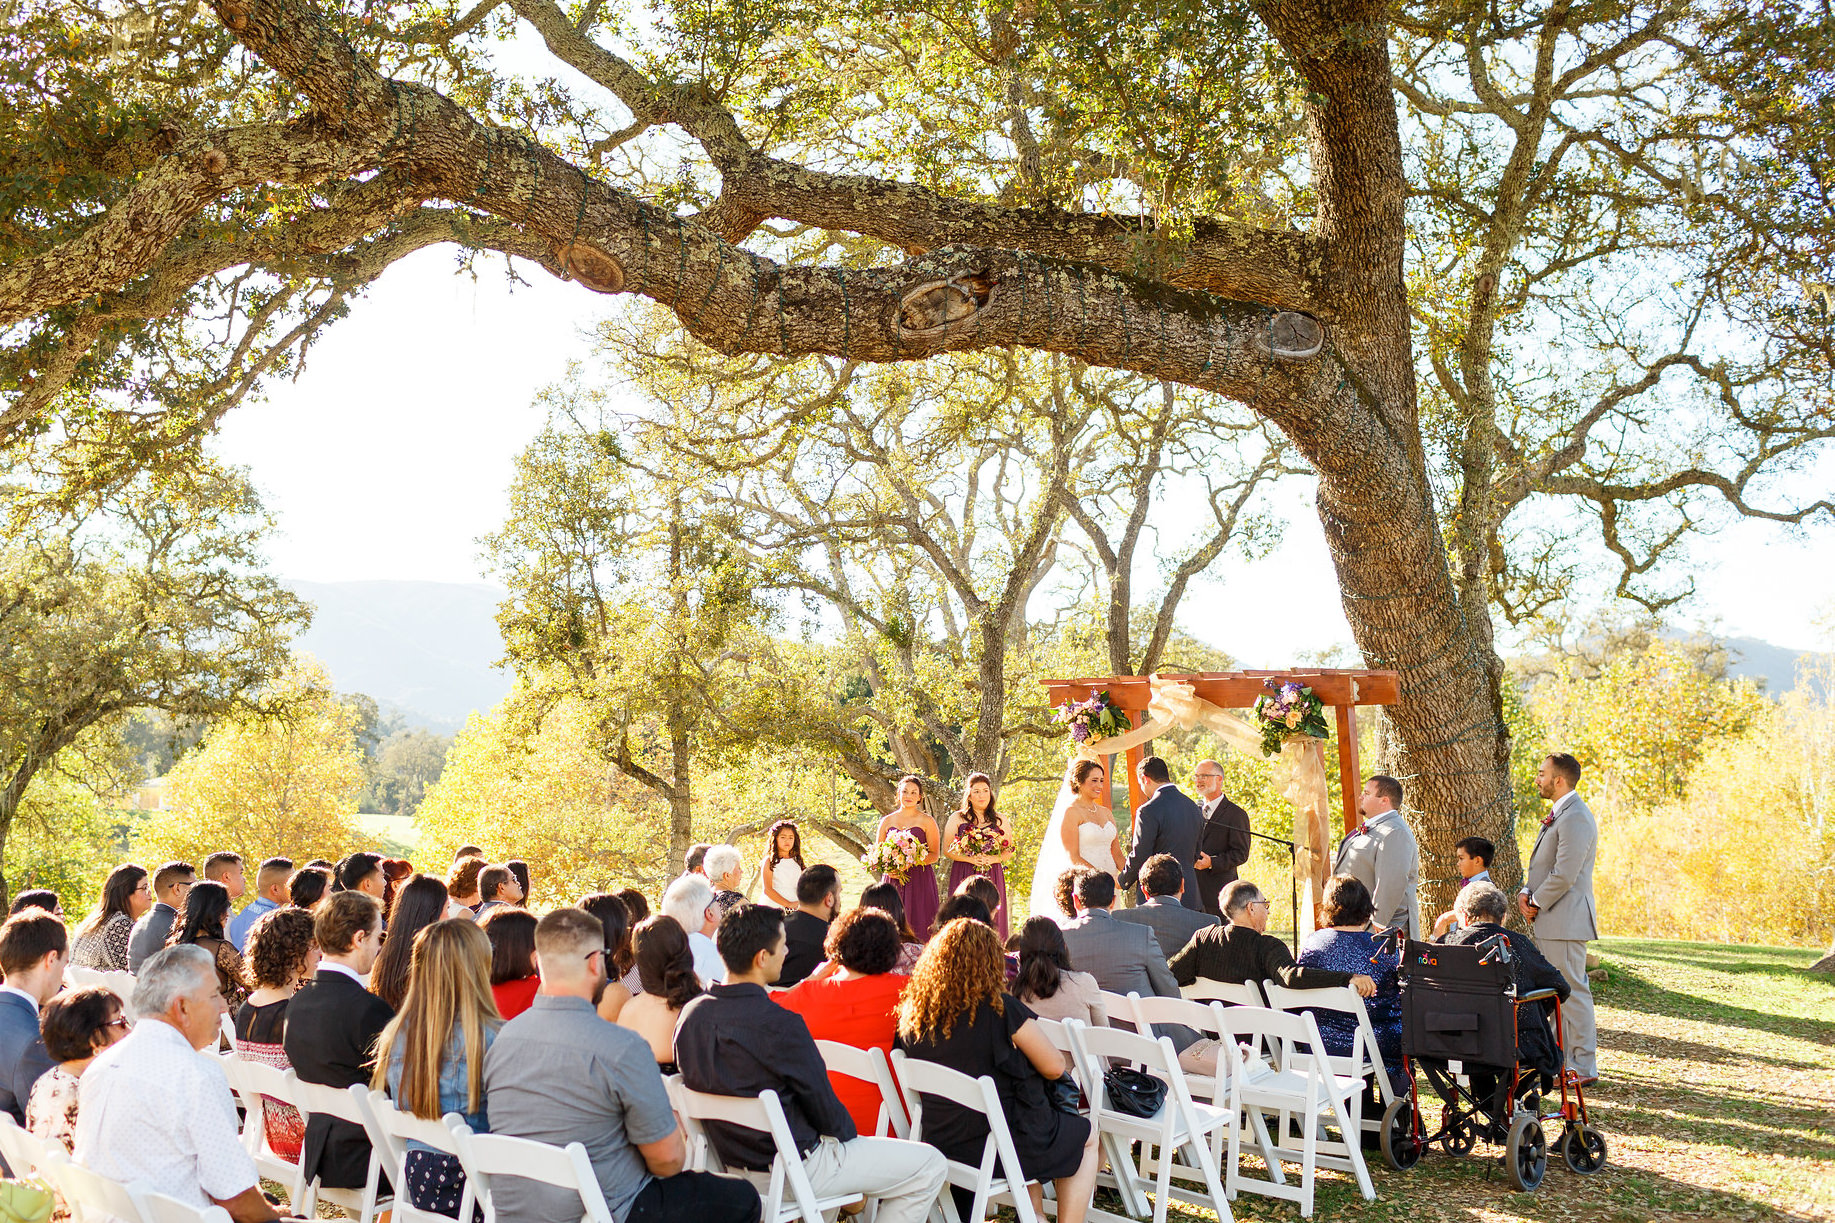 Central Coast Ranch Wedding Venues - Spanish Oaks Ranch